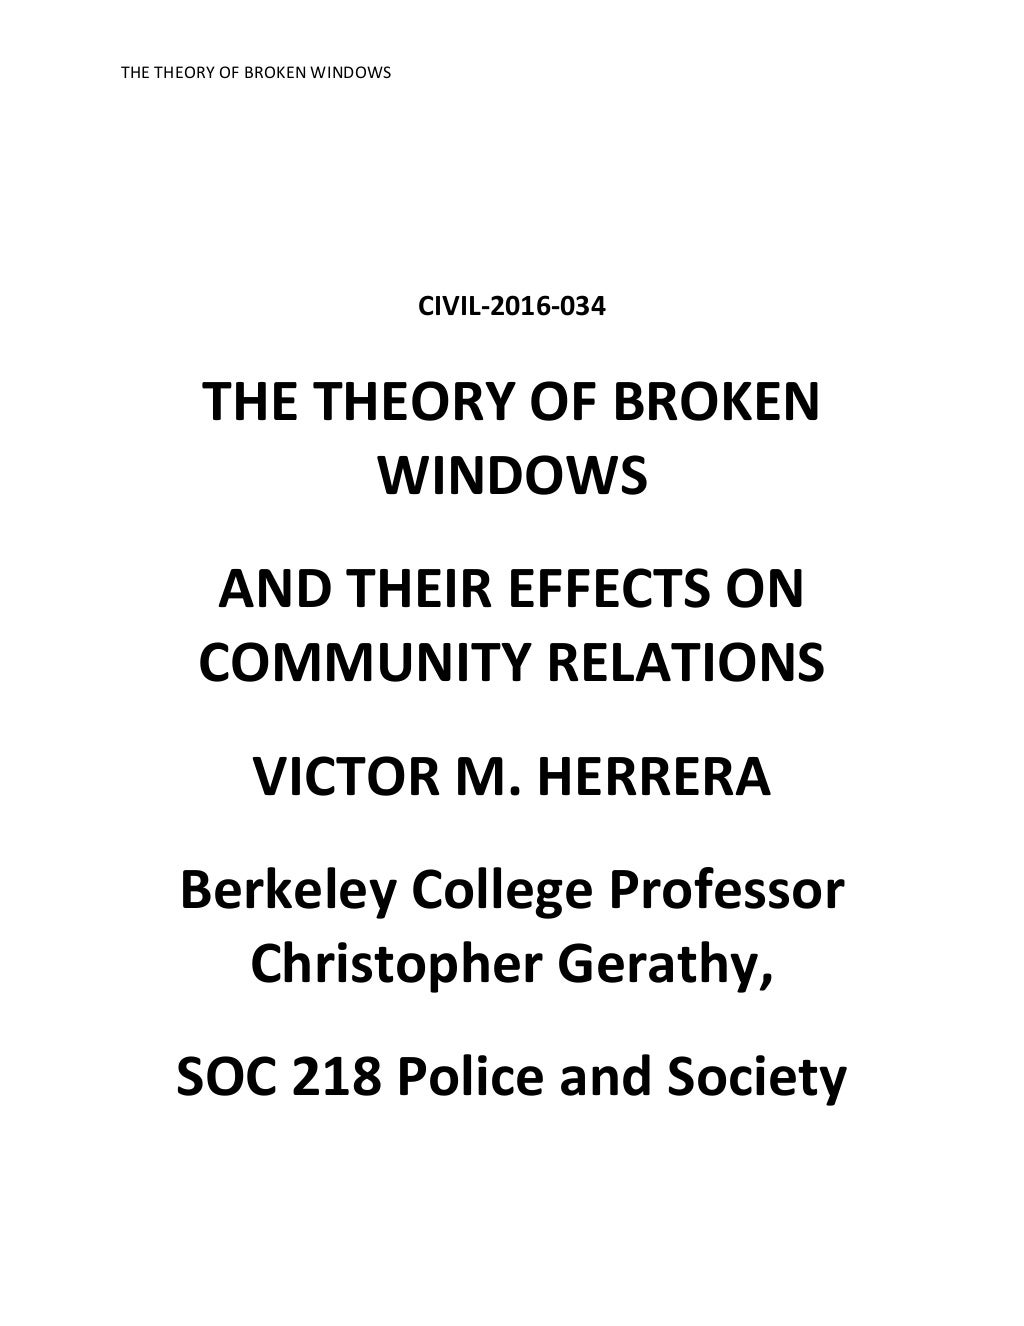 broken windows thesis definition